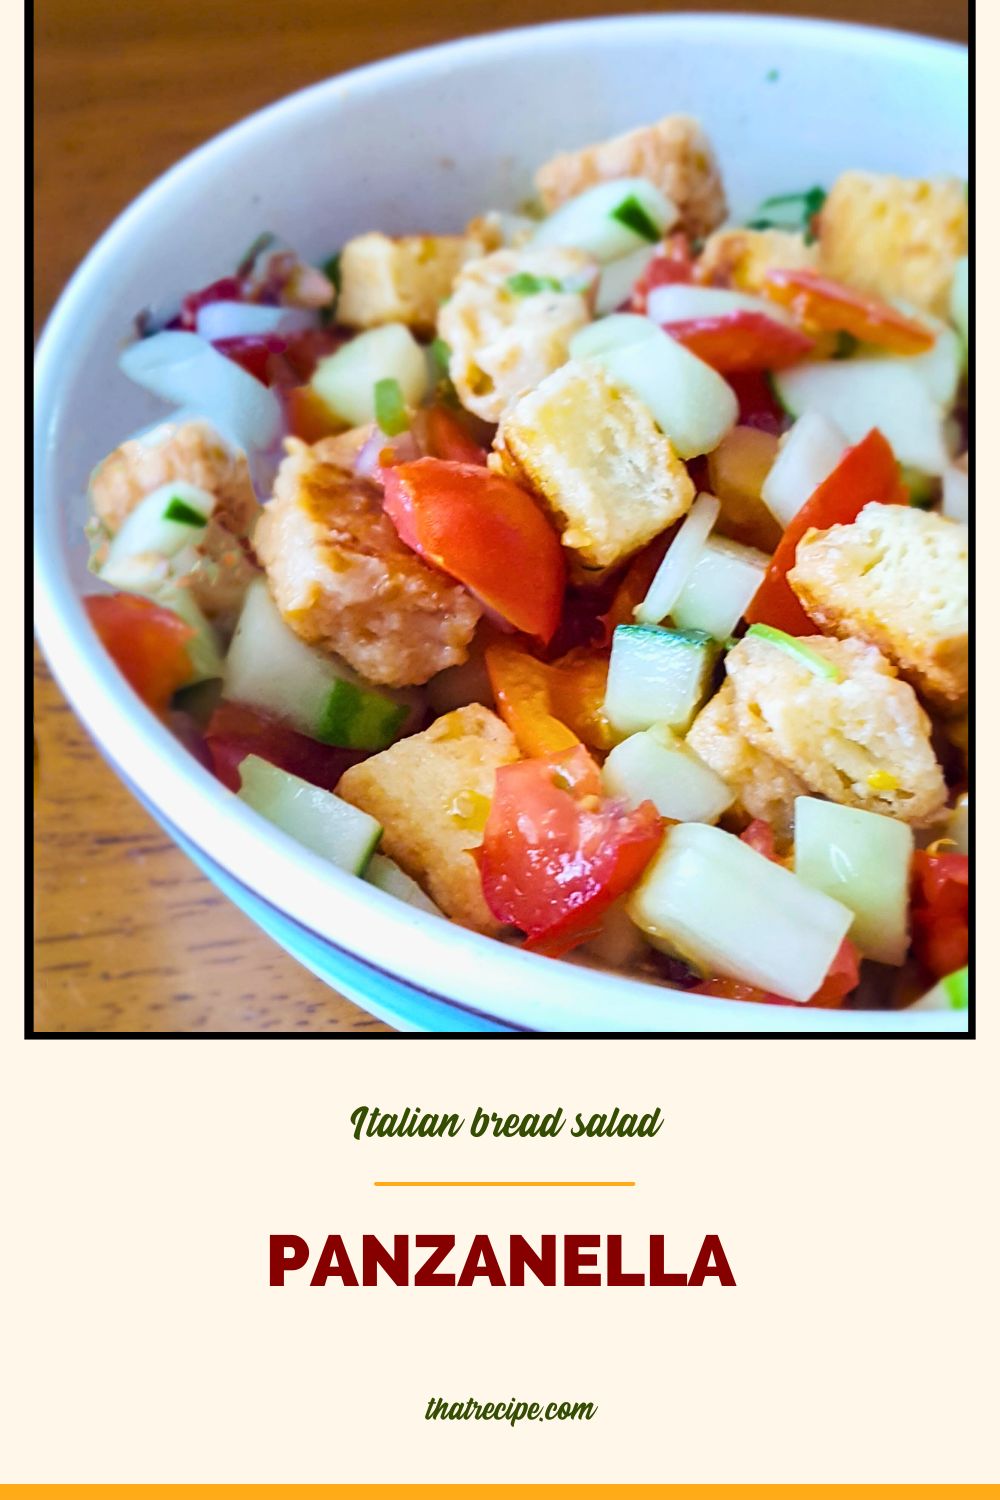 bowl of Panzanella with text overlay "Italian Bread Salad: Easy Panzanella"